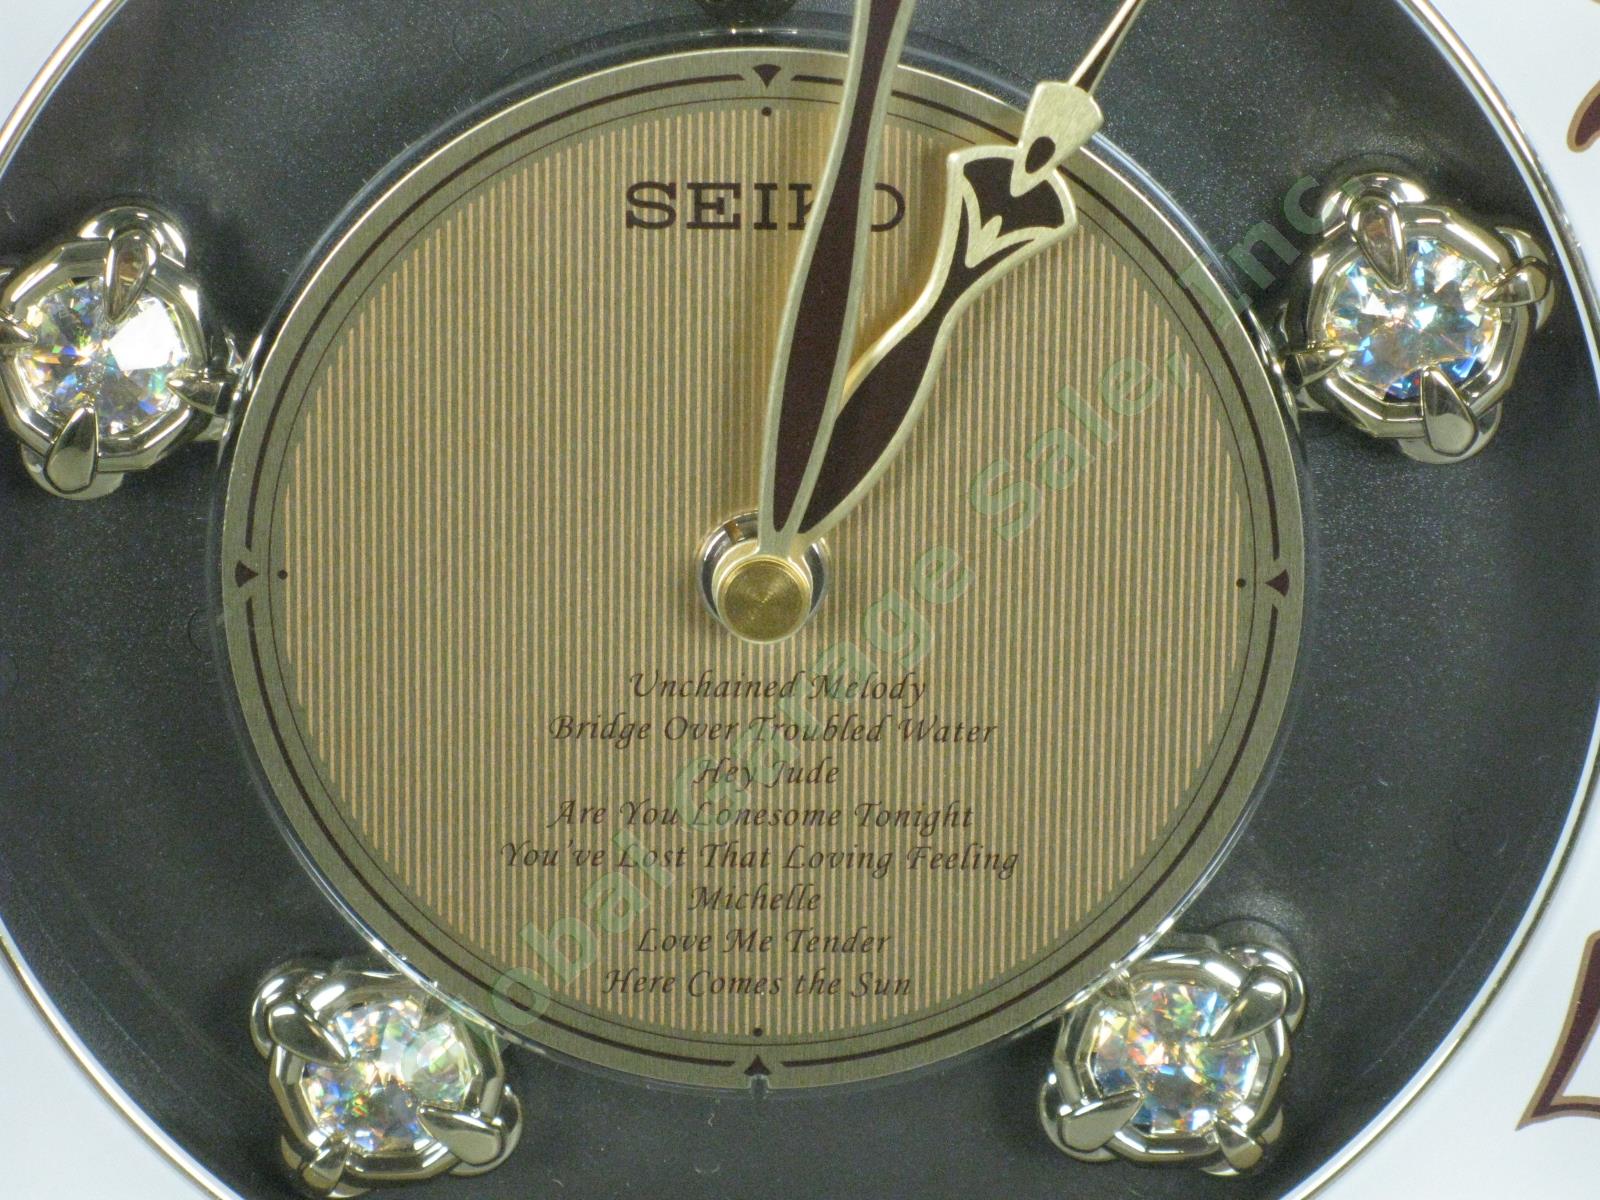 NEW IN BOX Seiko Beatles Melodies in Motion Clock Swarovski Crystals QXM134BRH 6